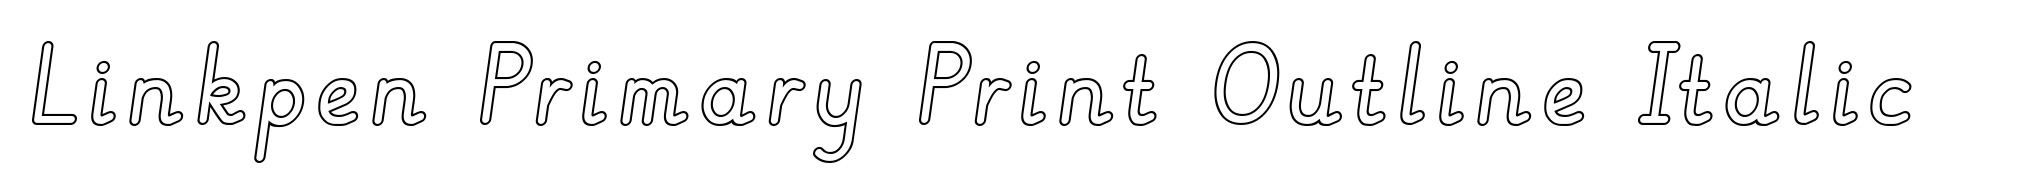 Linkpen Primary Print Outline Italic image